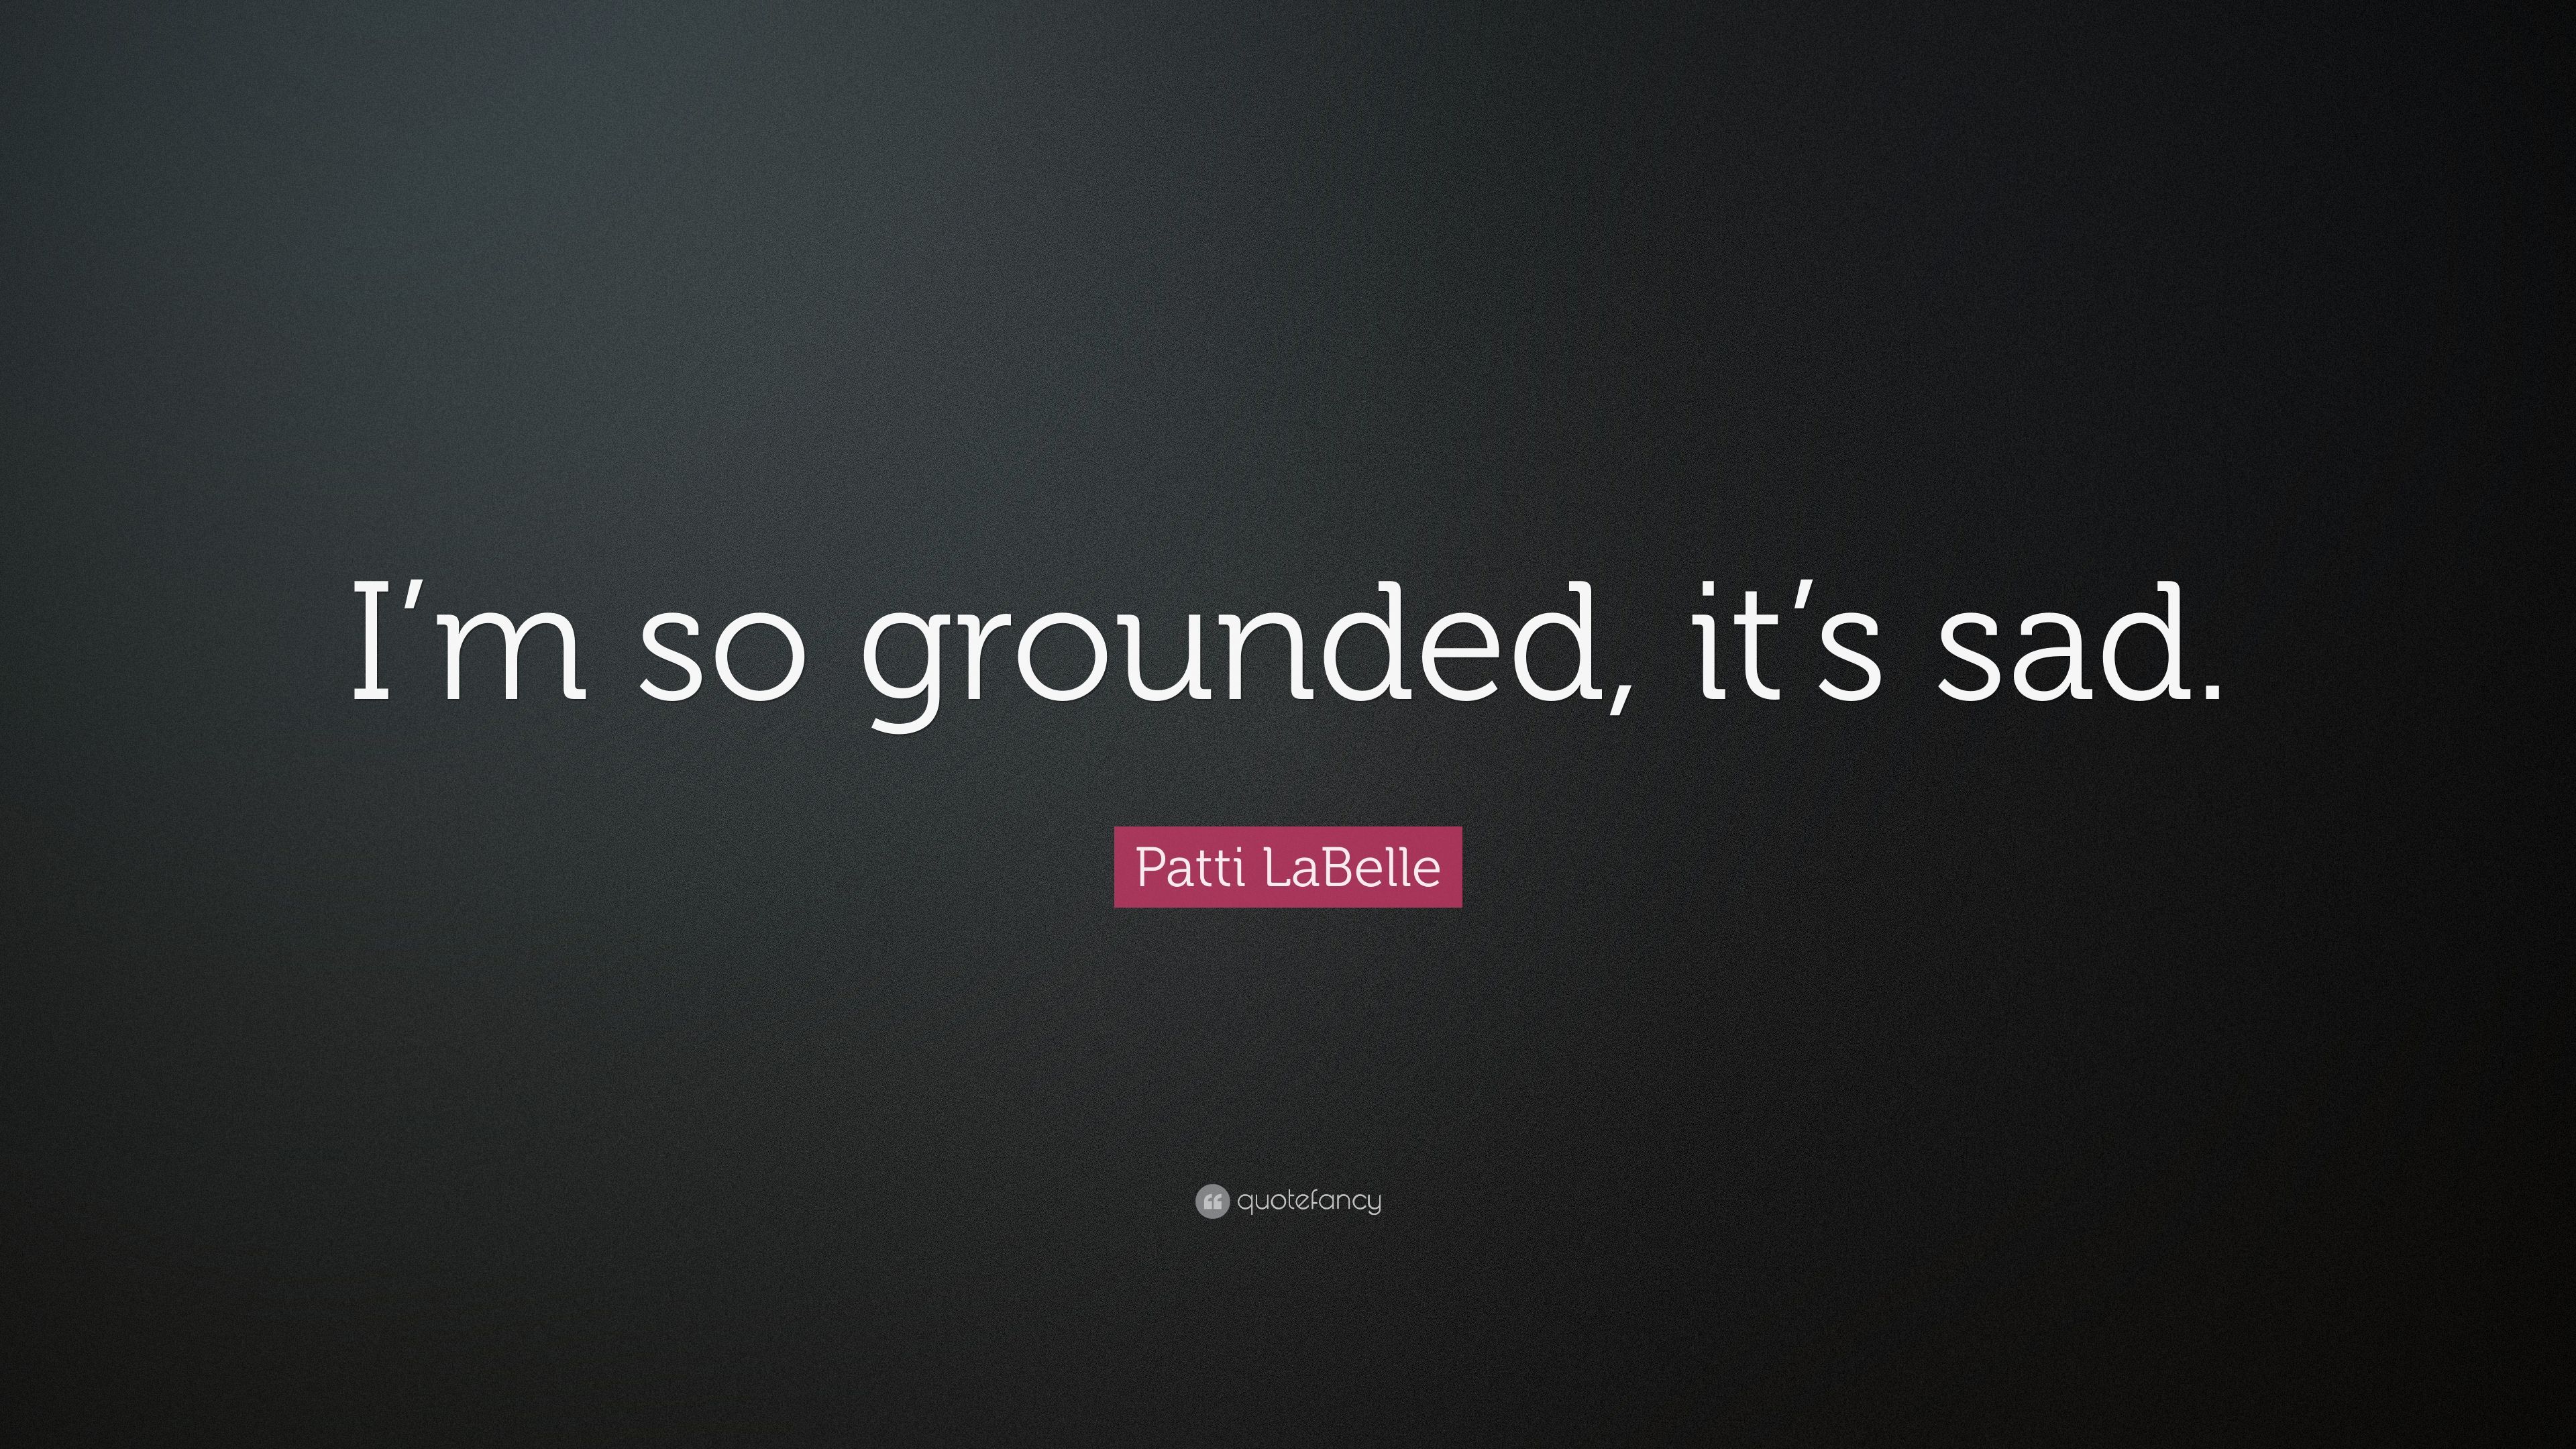 Patti LaBelle Quote: “I'm so grounded, it's sad.” 7 wallpaper